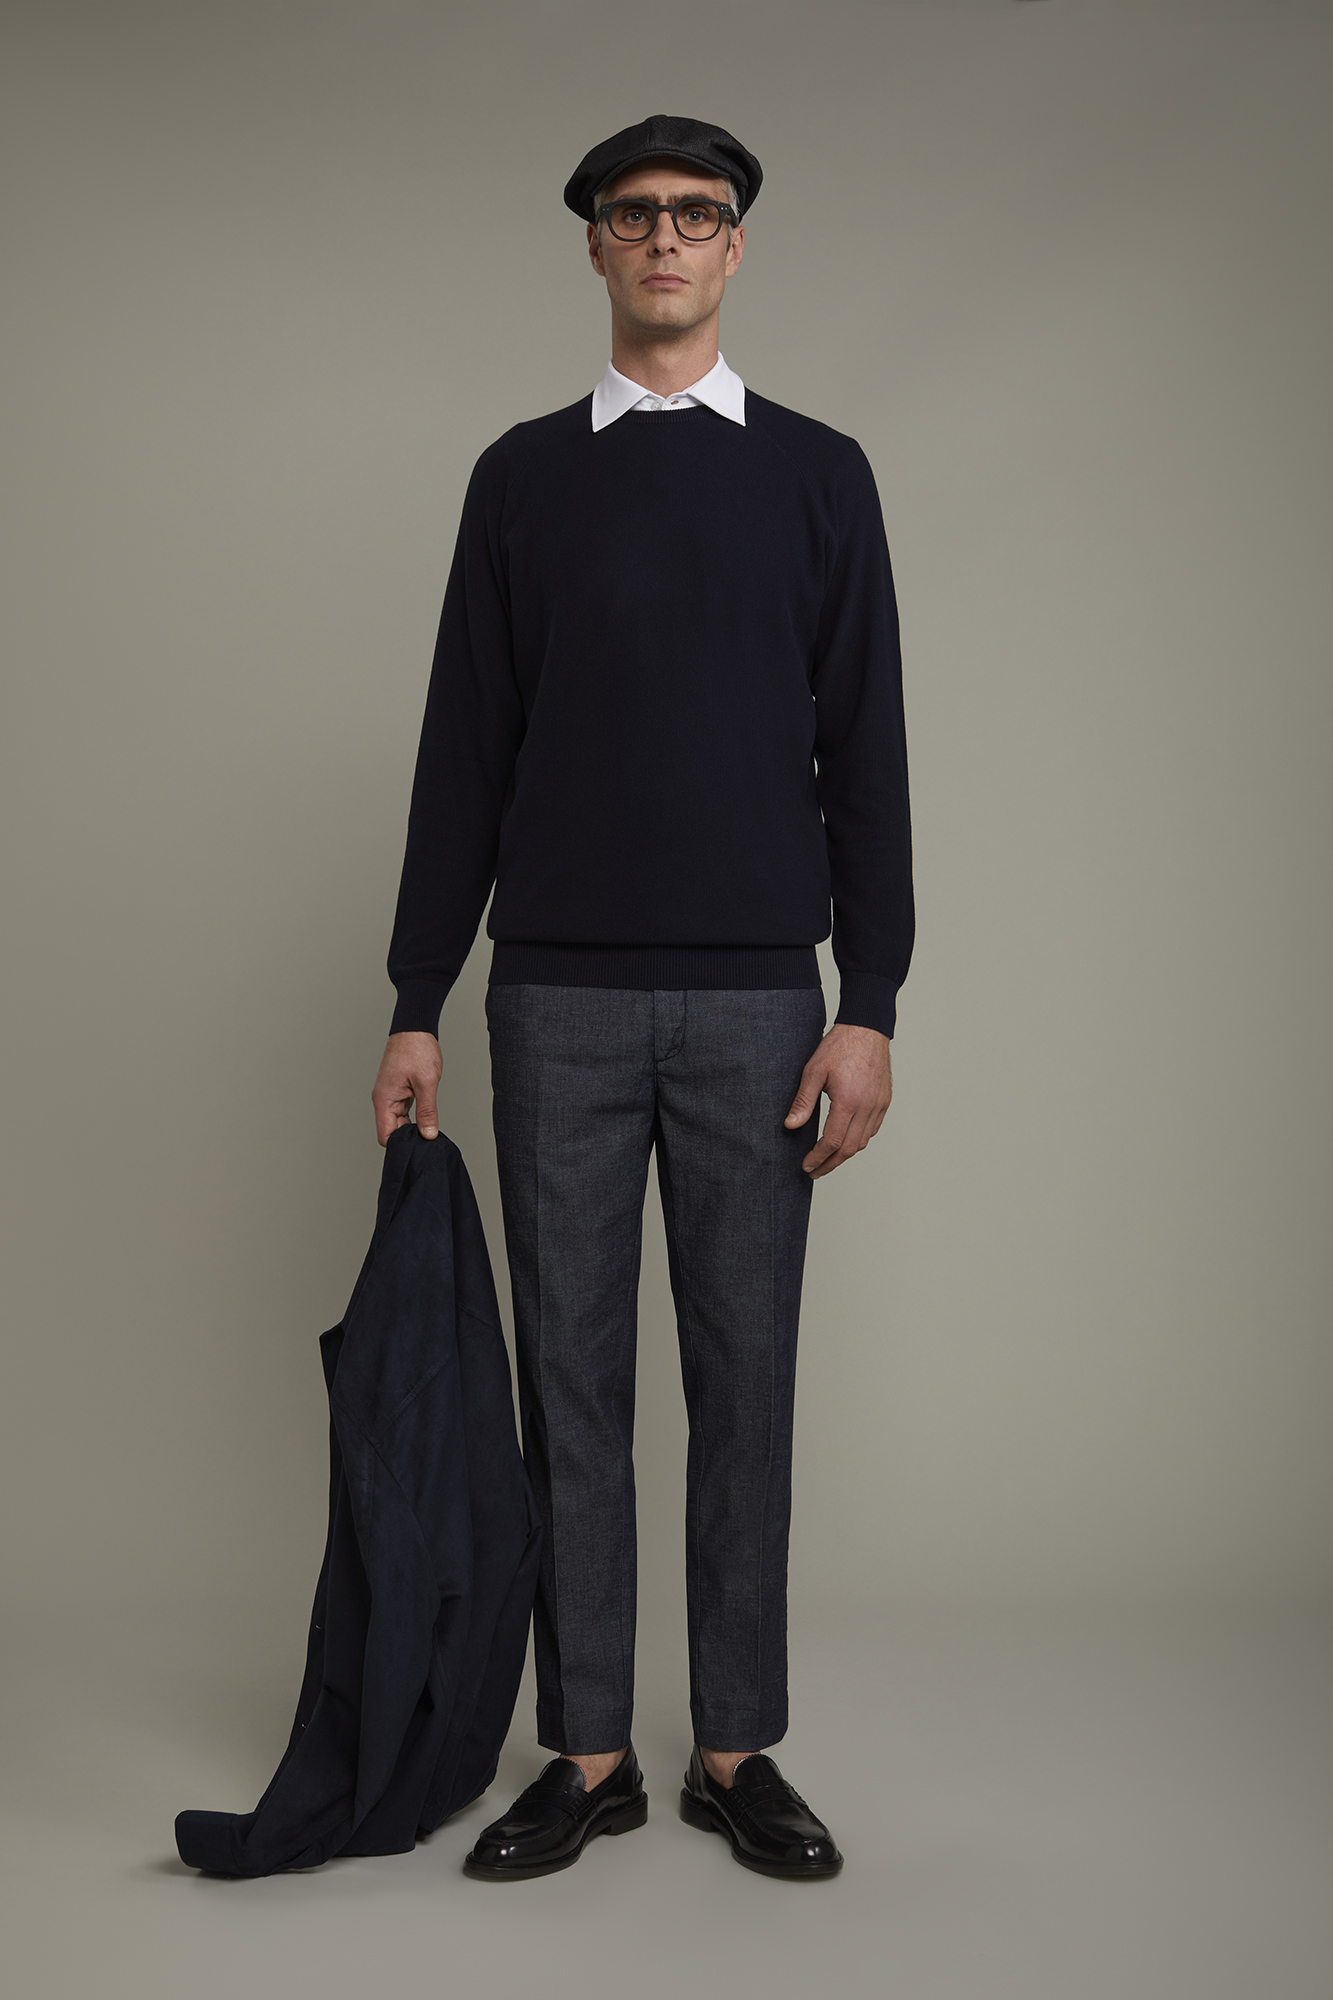 Men's Round neck raglan sweater 100% cotton regular fit image number null